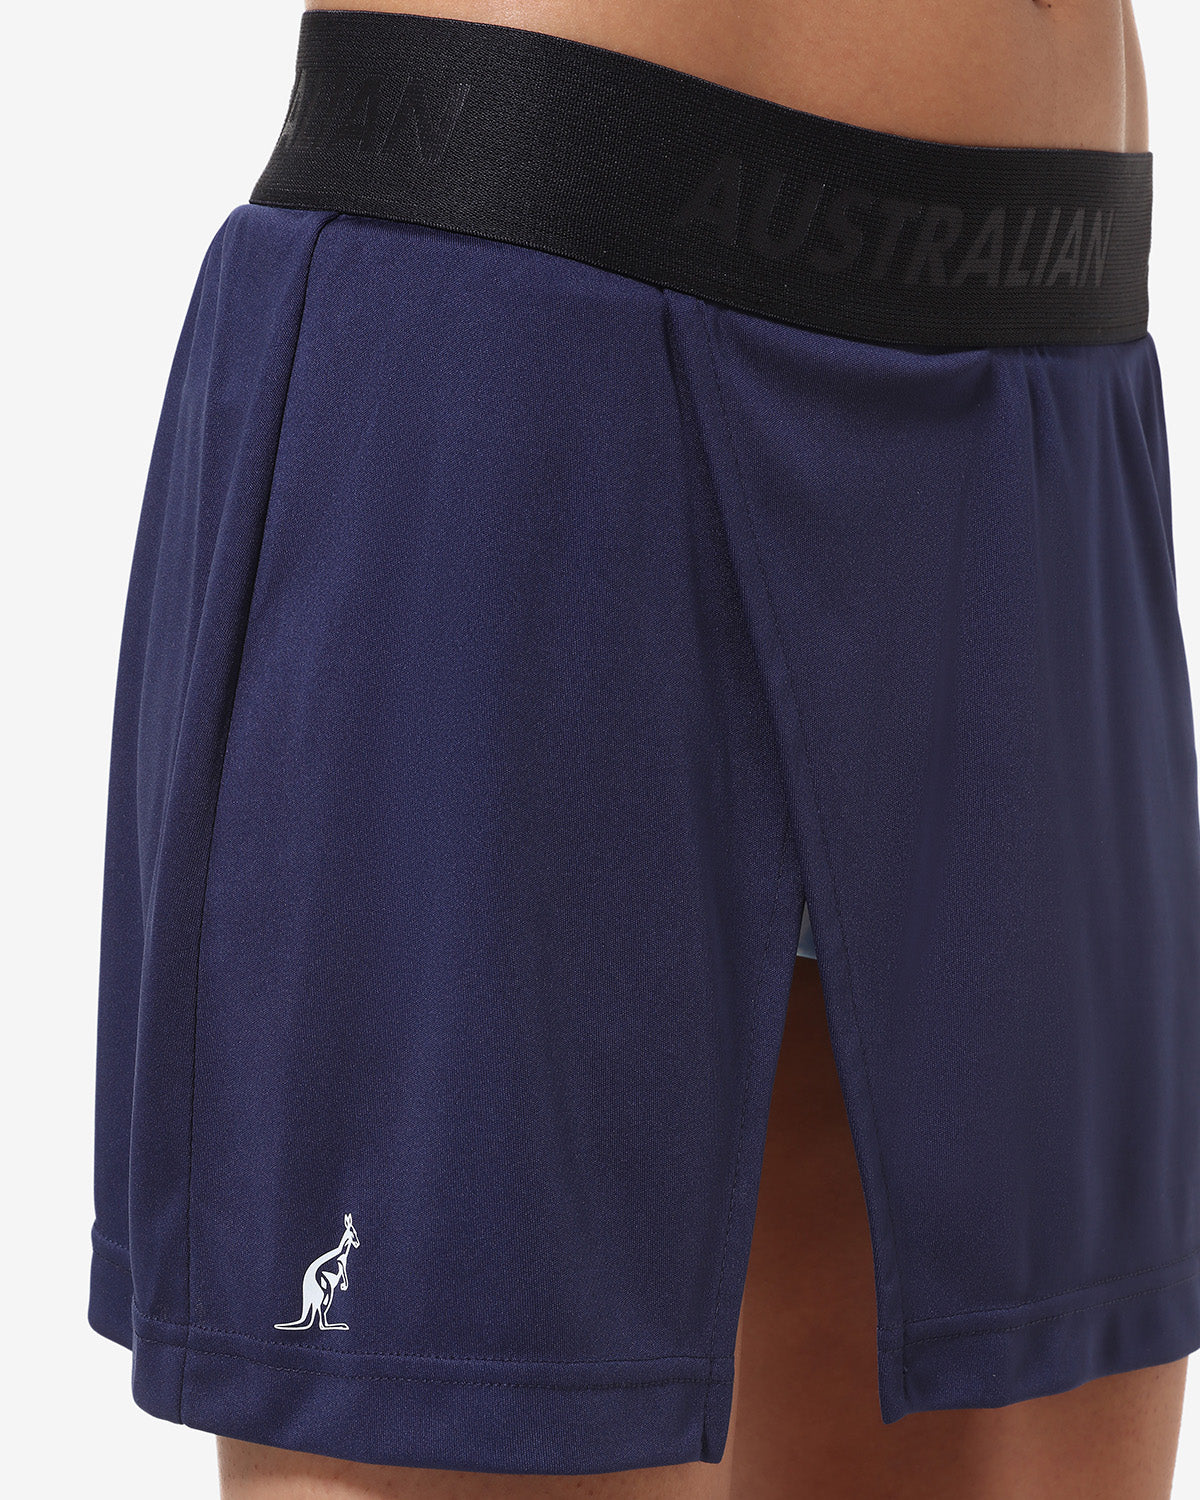 Blaze Skirt: Australian Tennis